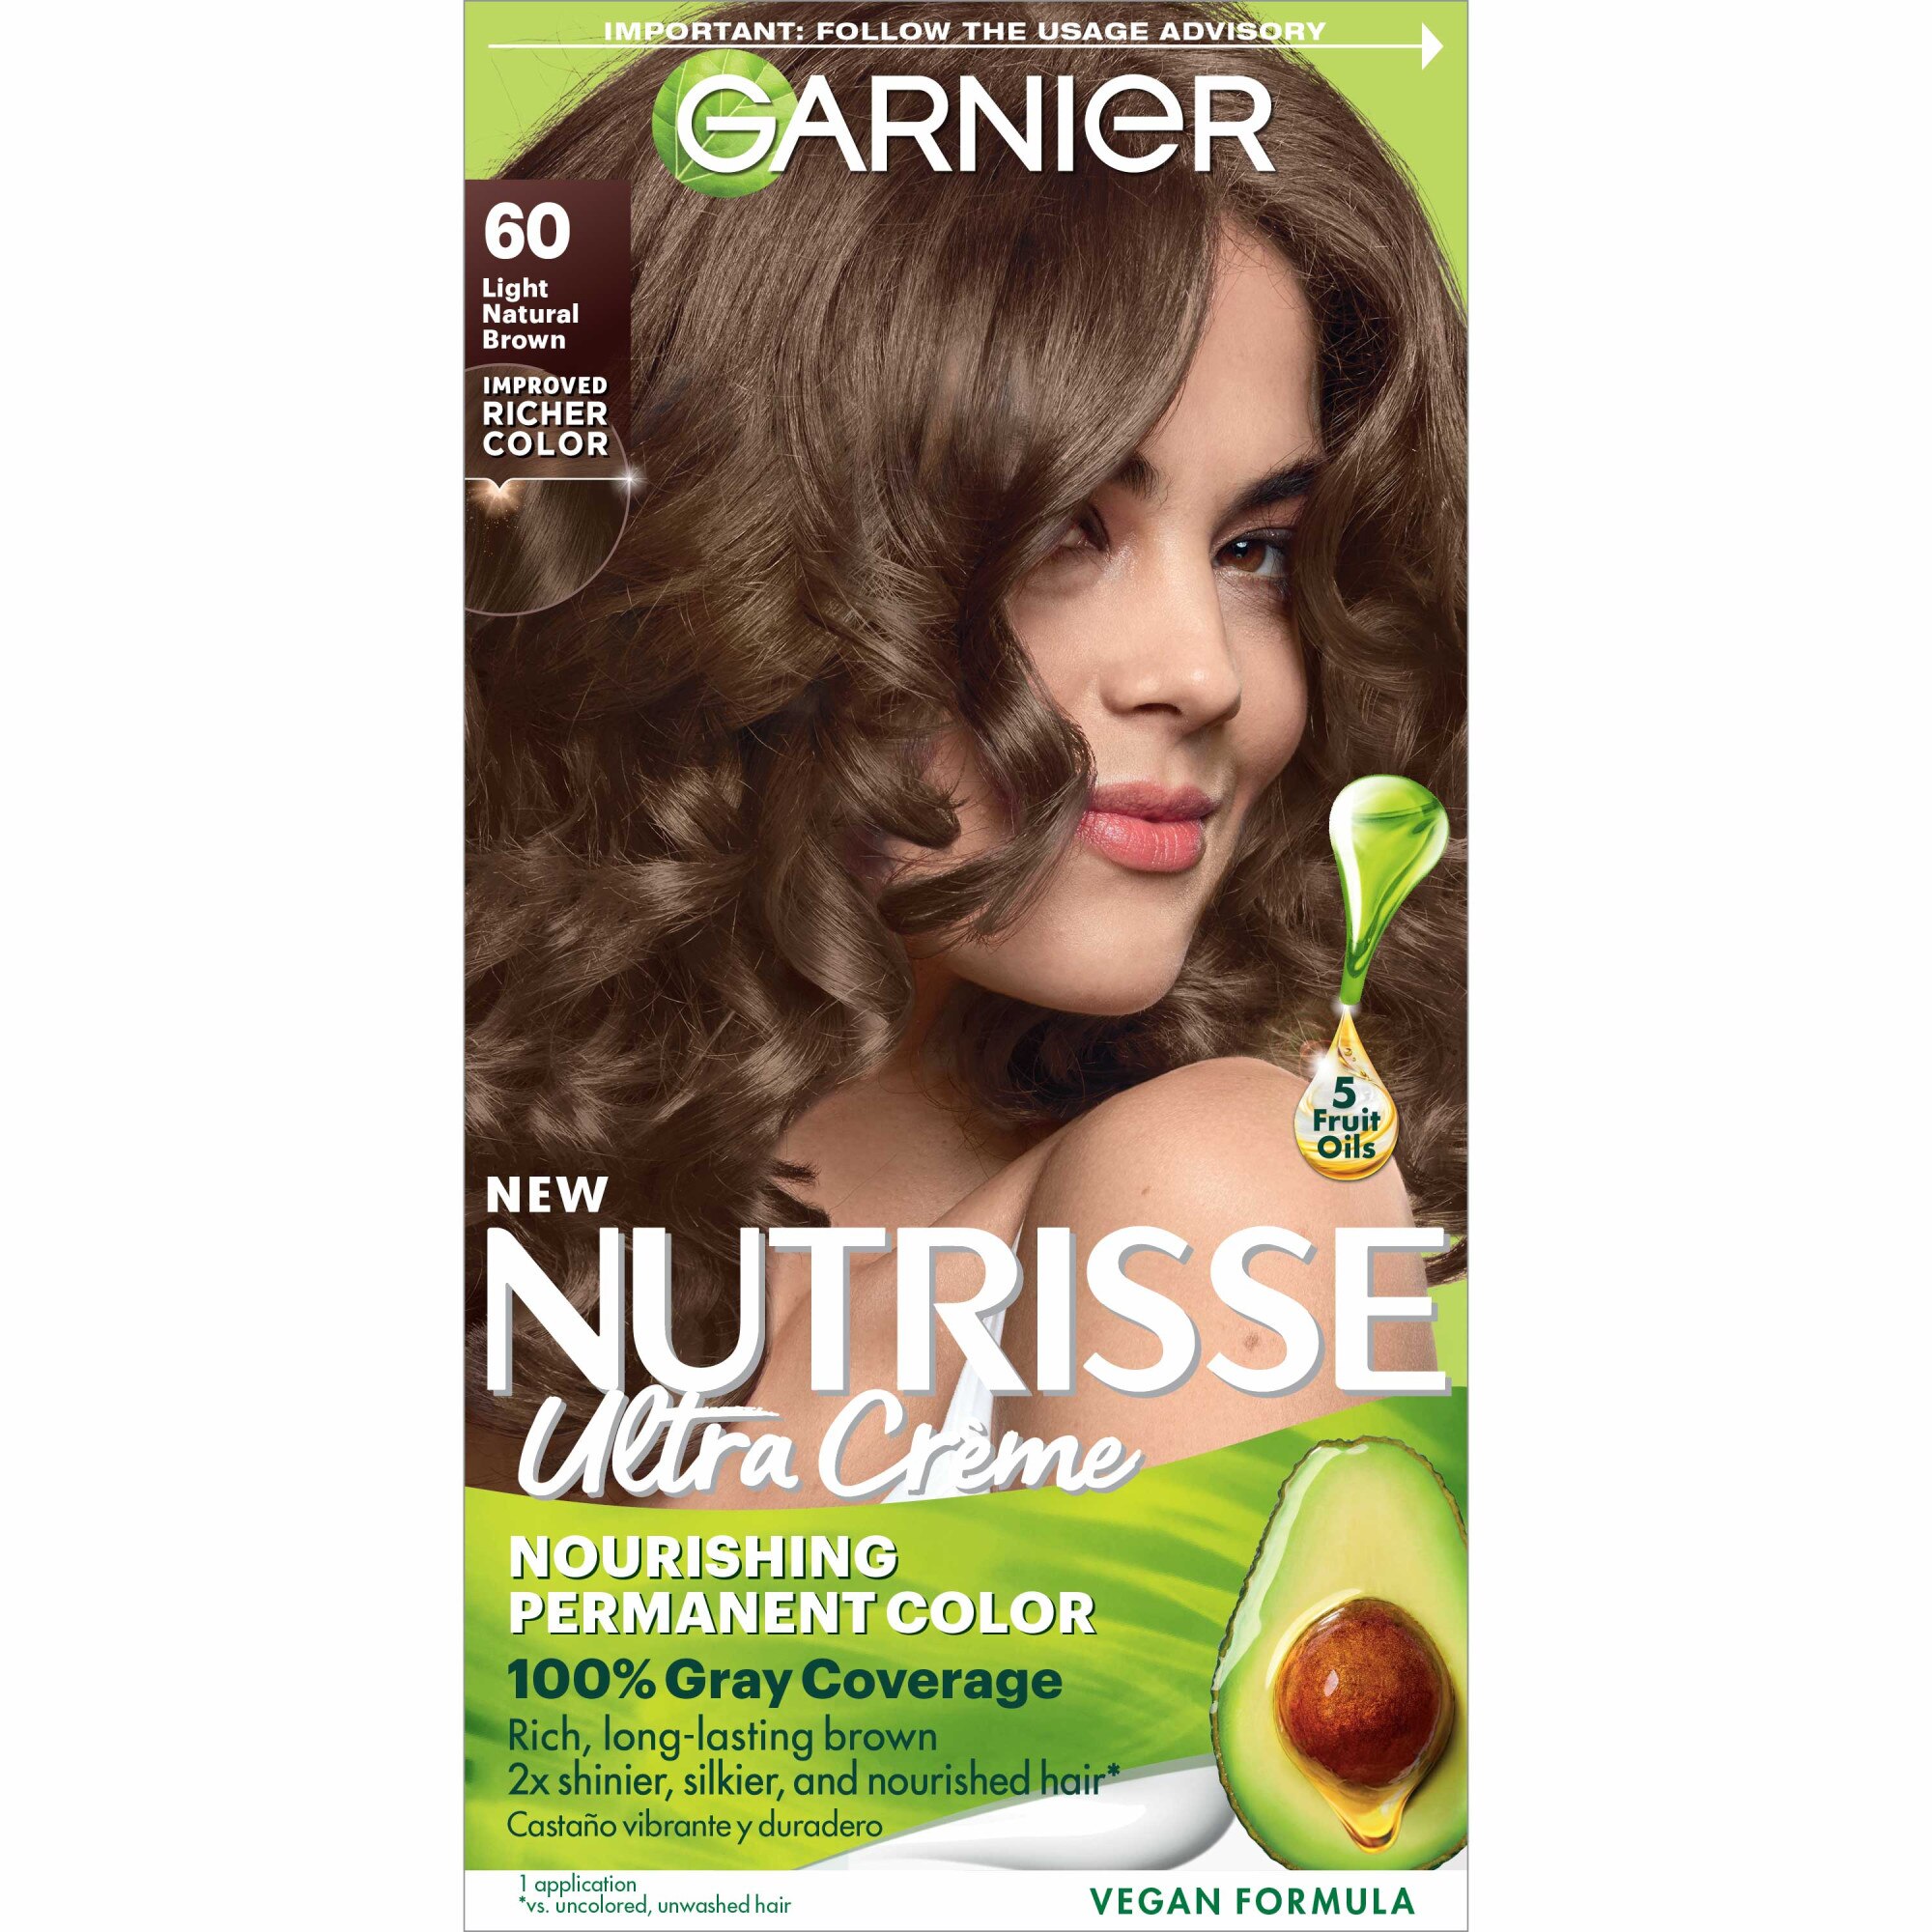 Garnier Nutrisse Nourishing Permanent Hair Color Creme, 60 Light Natural Brown , CVS